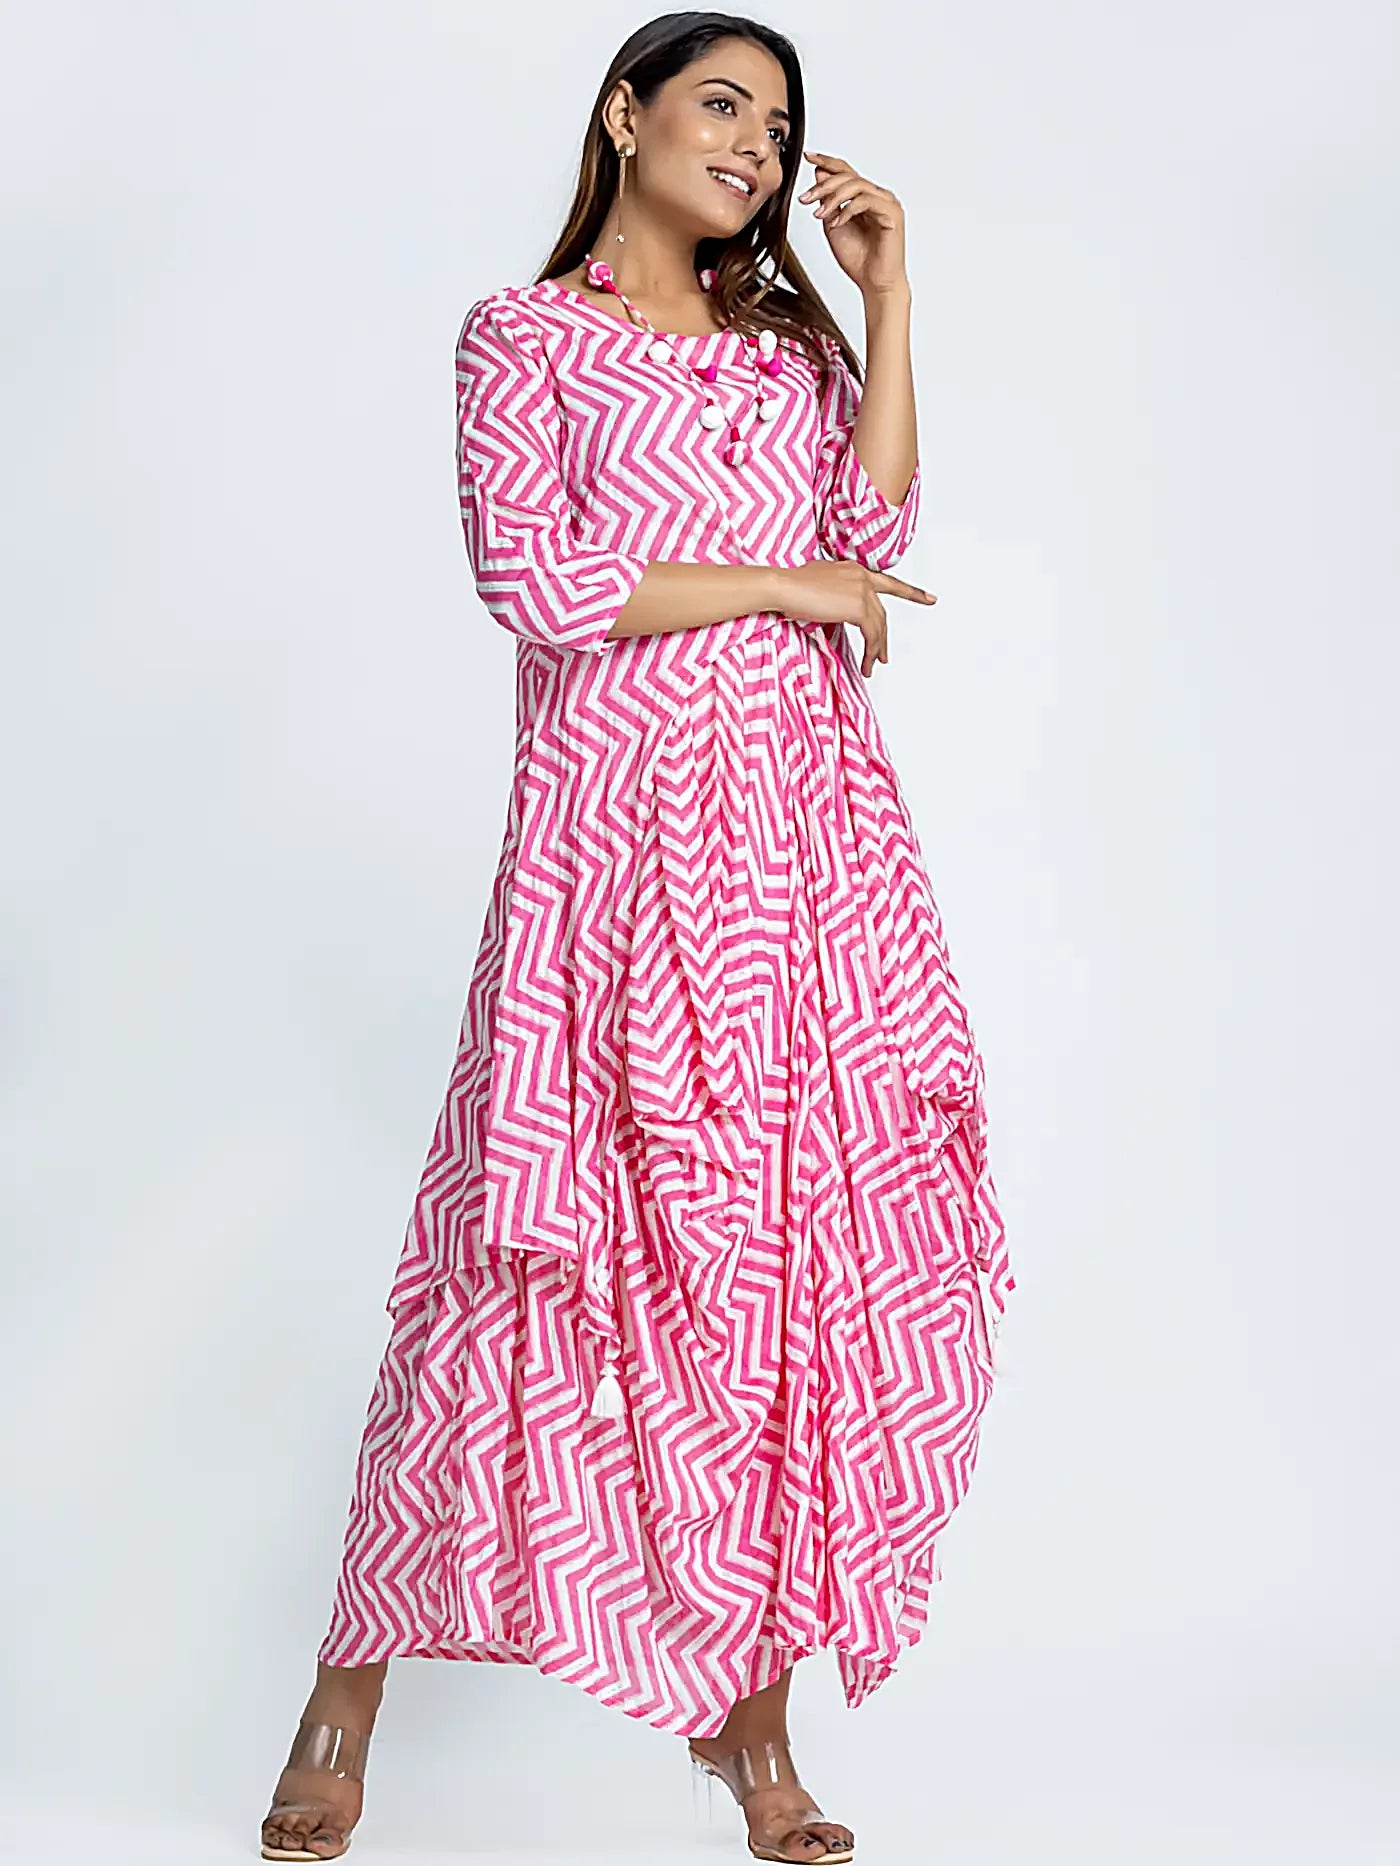 Draped dhoti dress by Myoho by Kiran and Meghna | The Secret Label